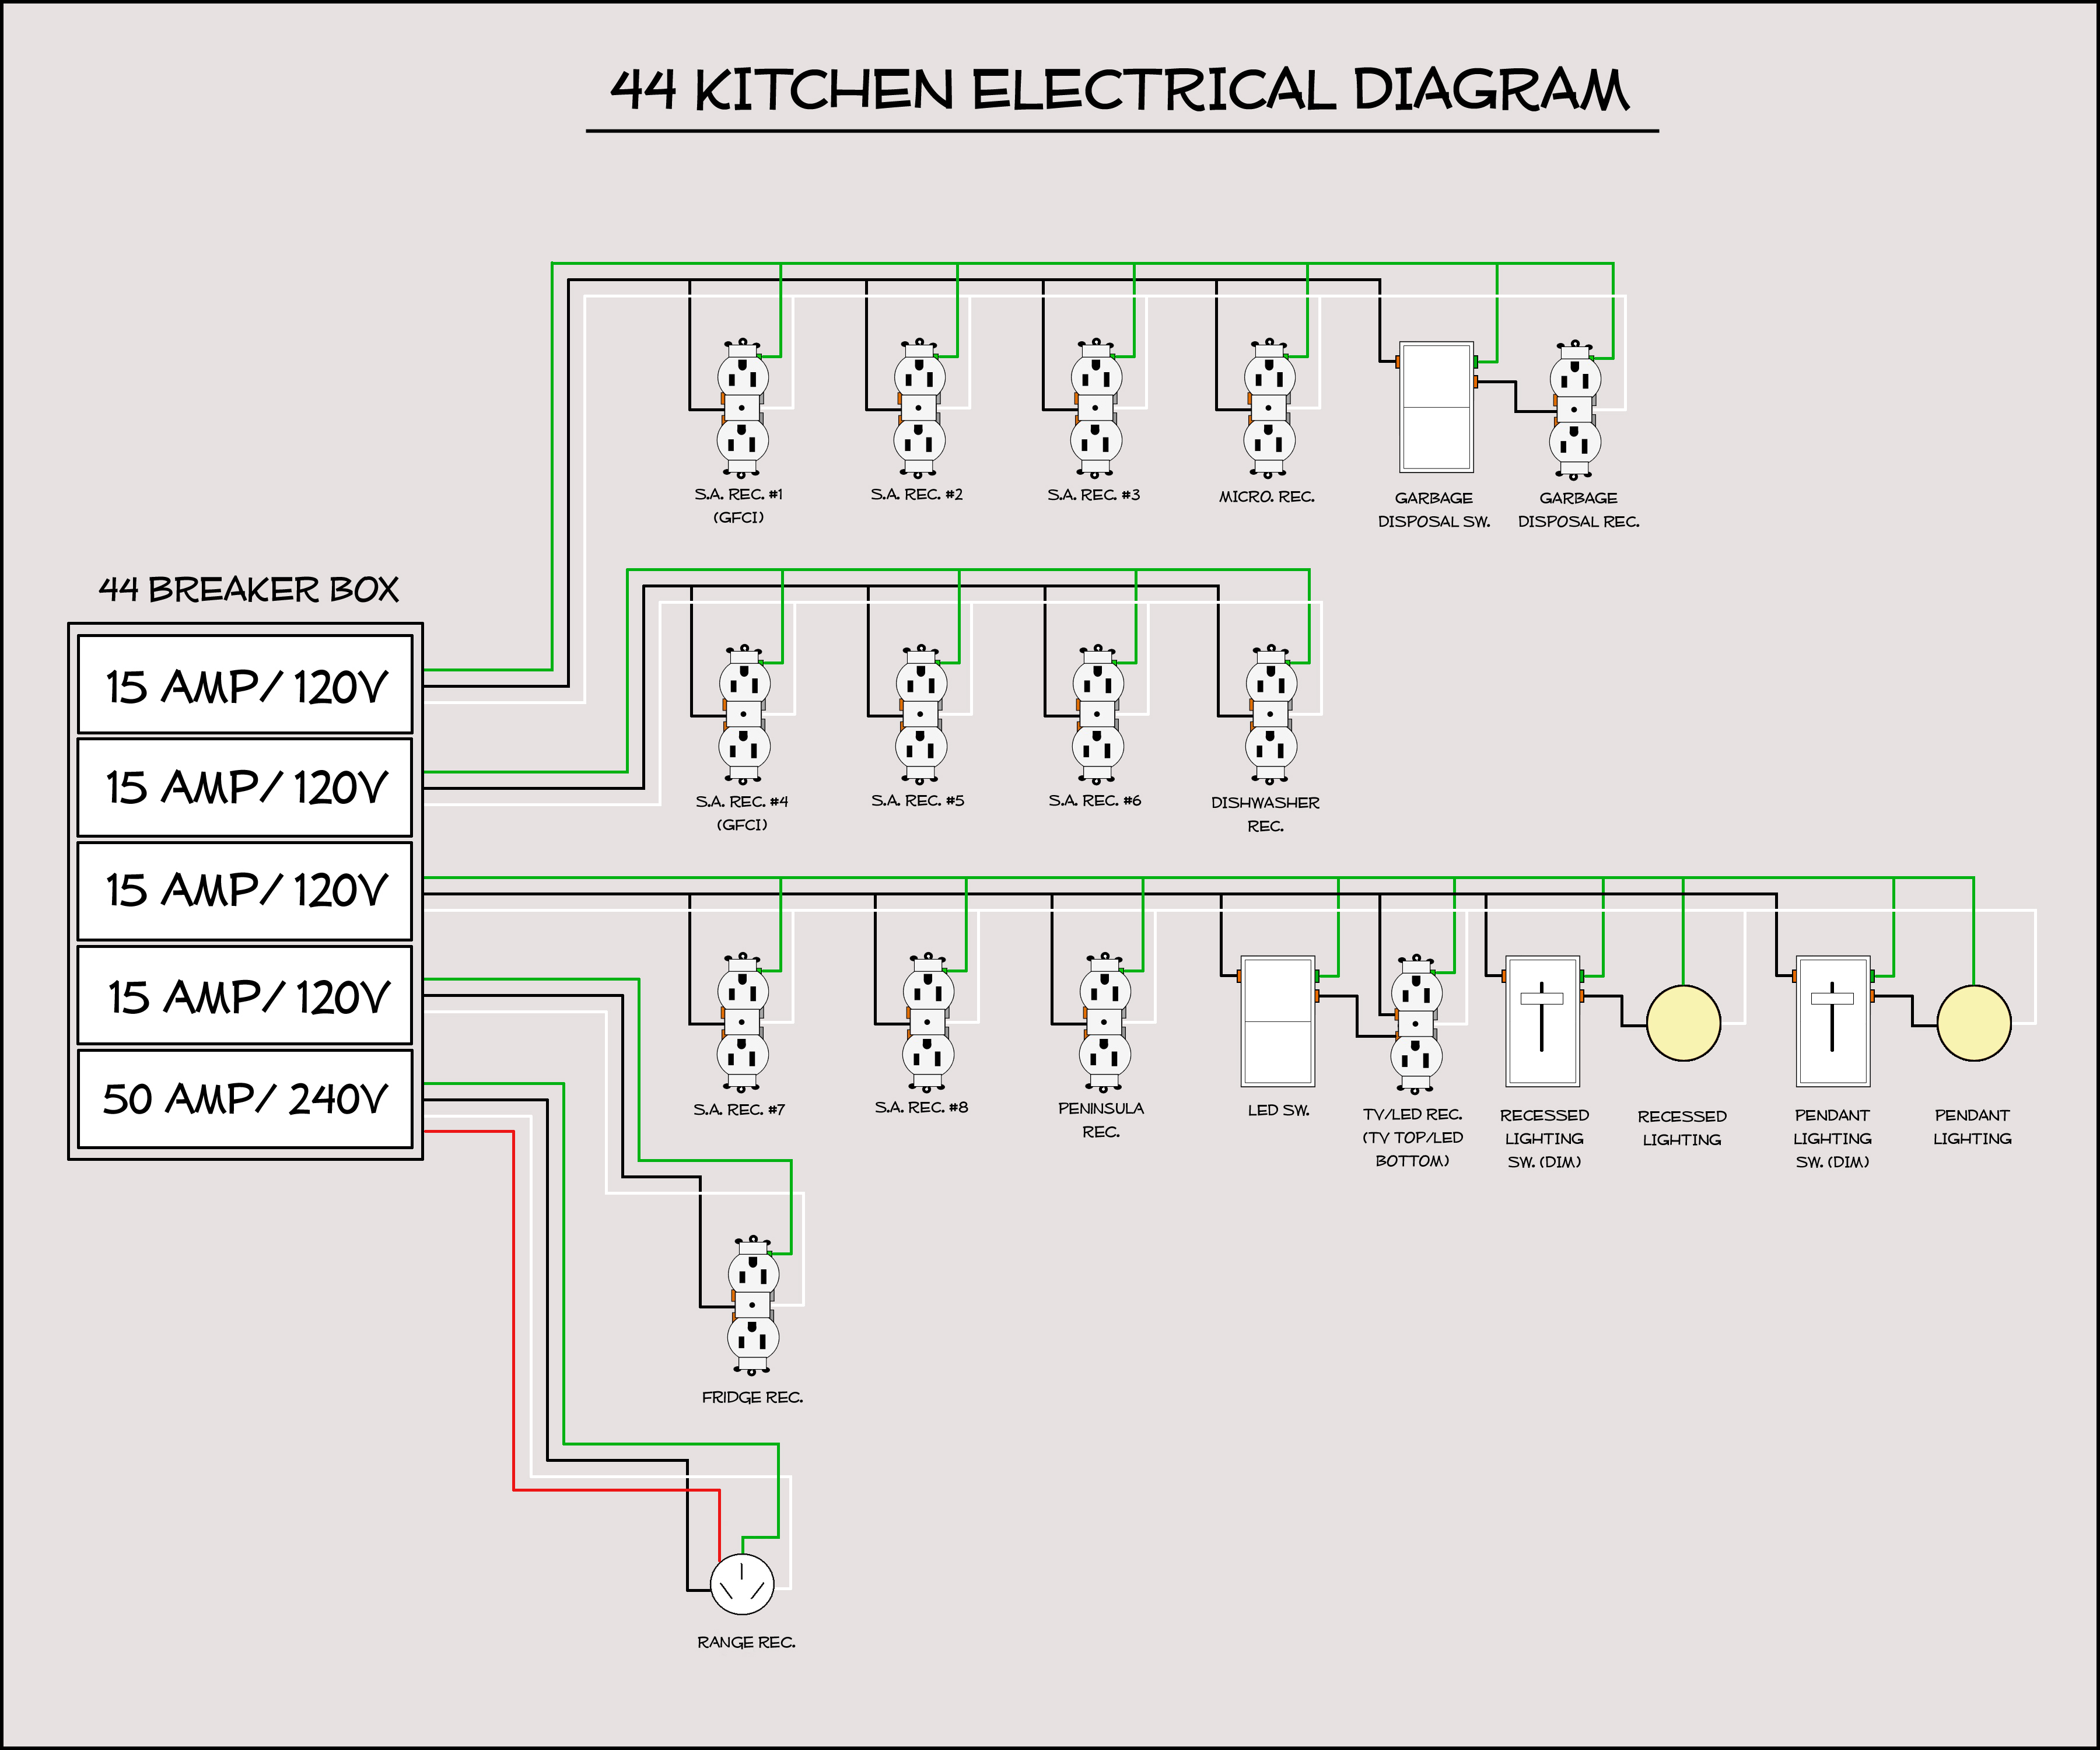 Electrical Wiring Diagram Kitchen | Wiring Diagram - Kitchen Wiring Diagram